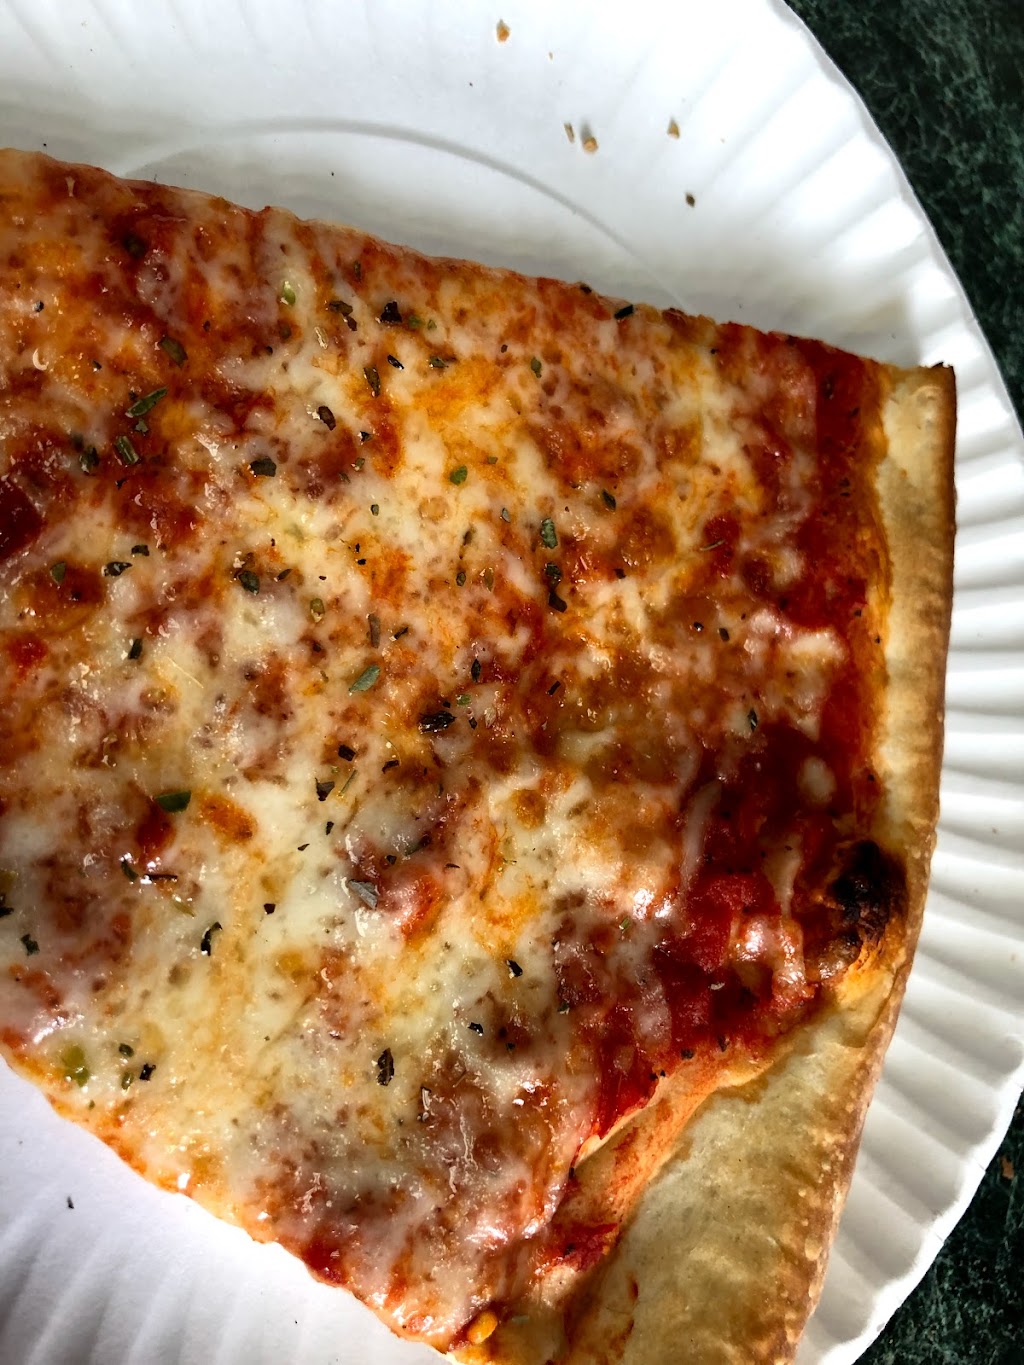 Pizza Amore | 171 Dubois Ave, Valley Stream, NY 11581 | Phone: (516) 872-9229